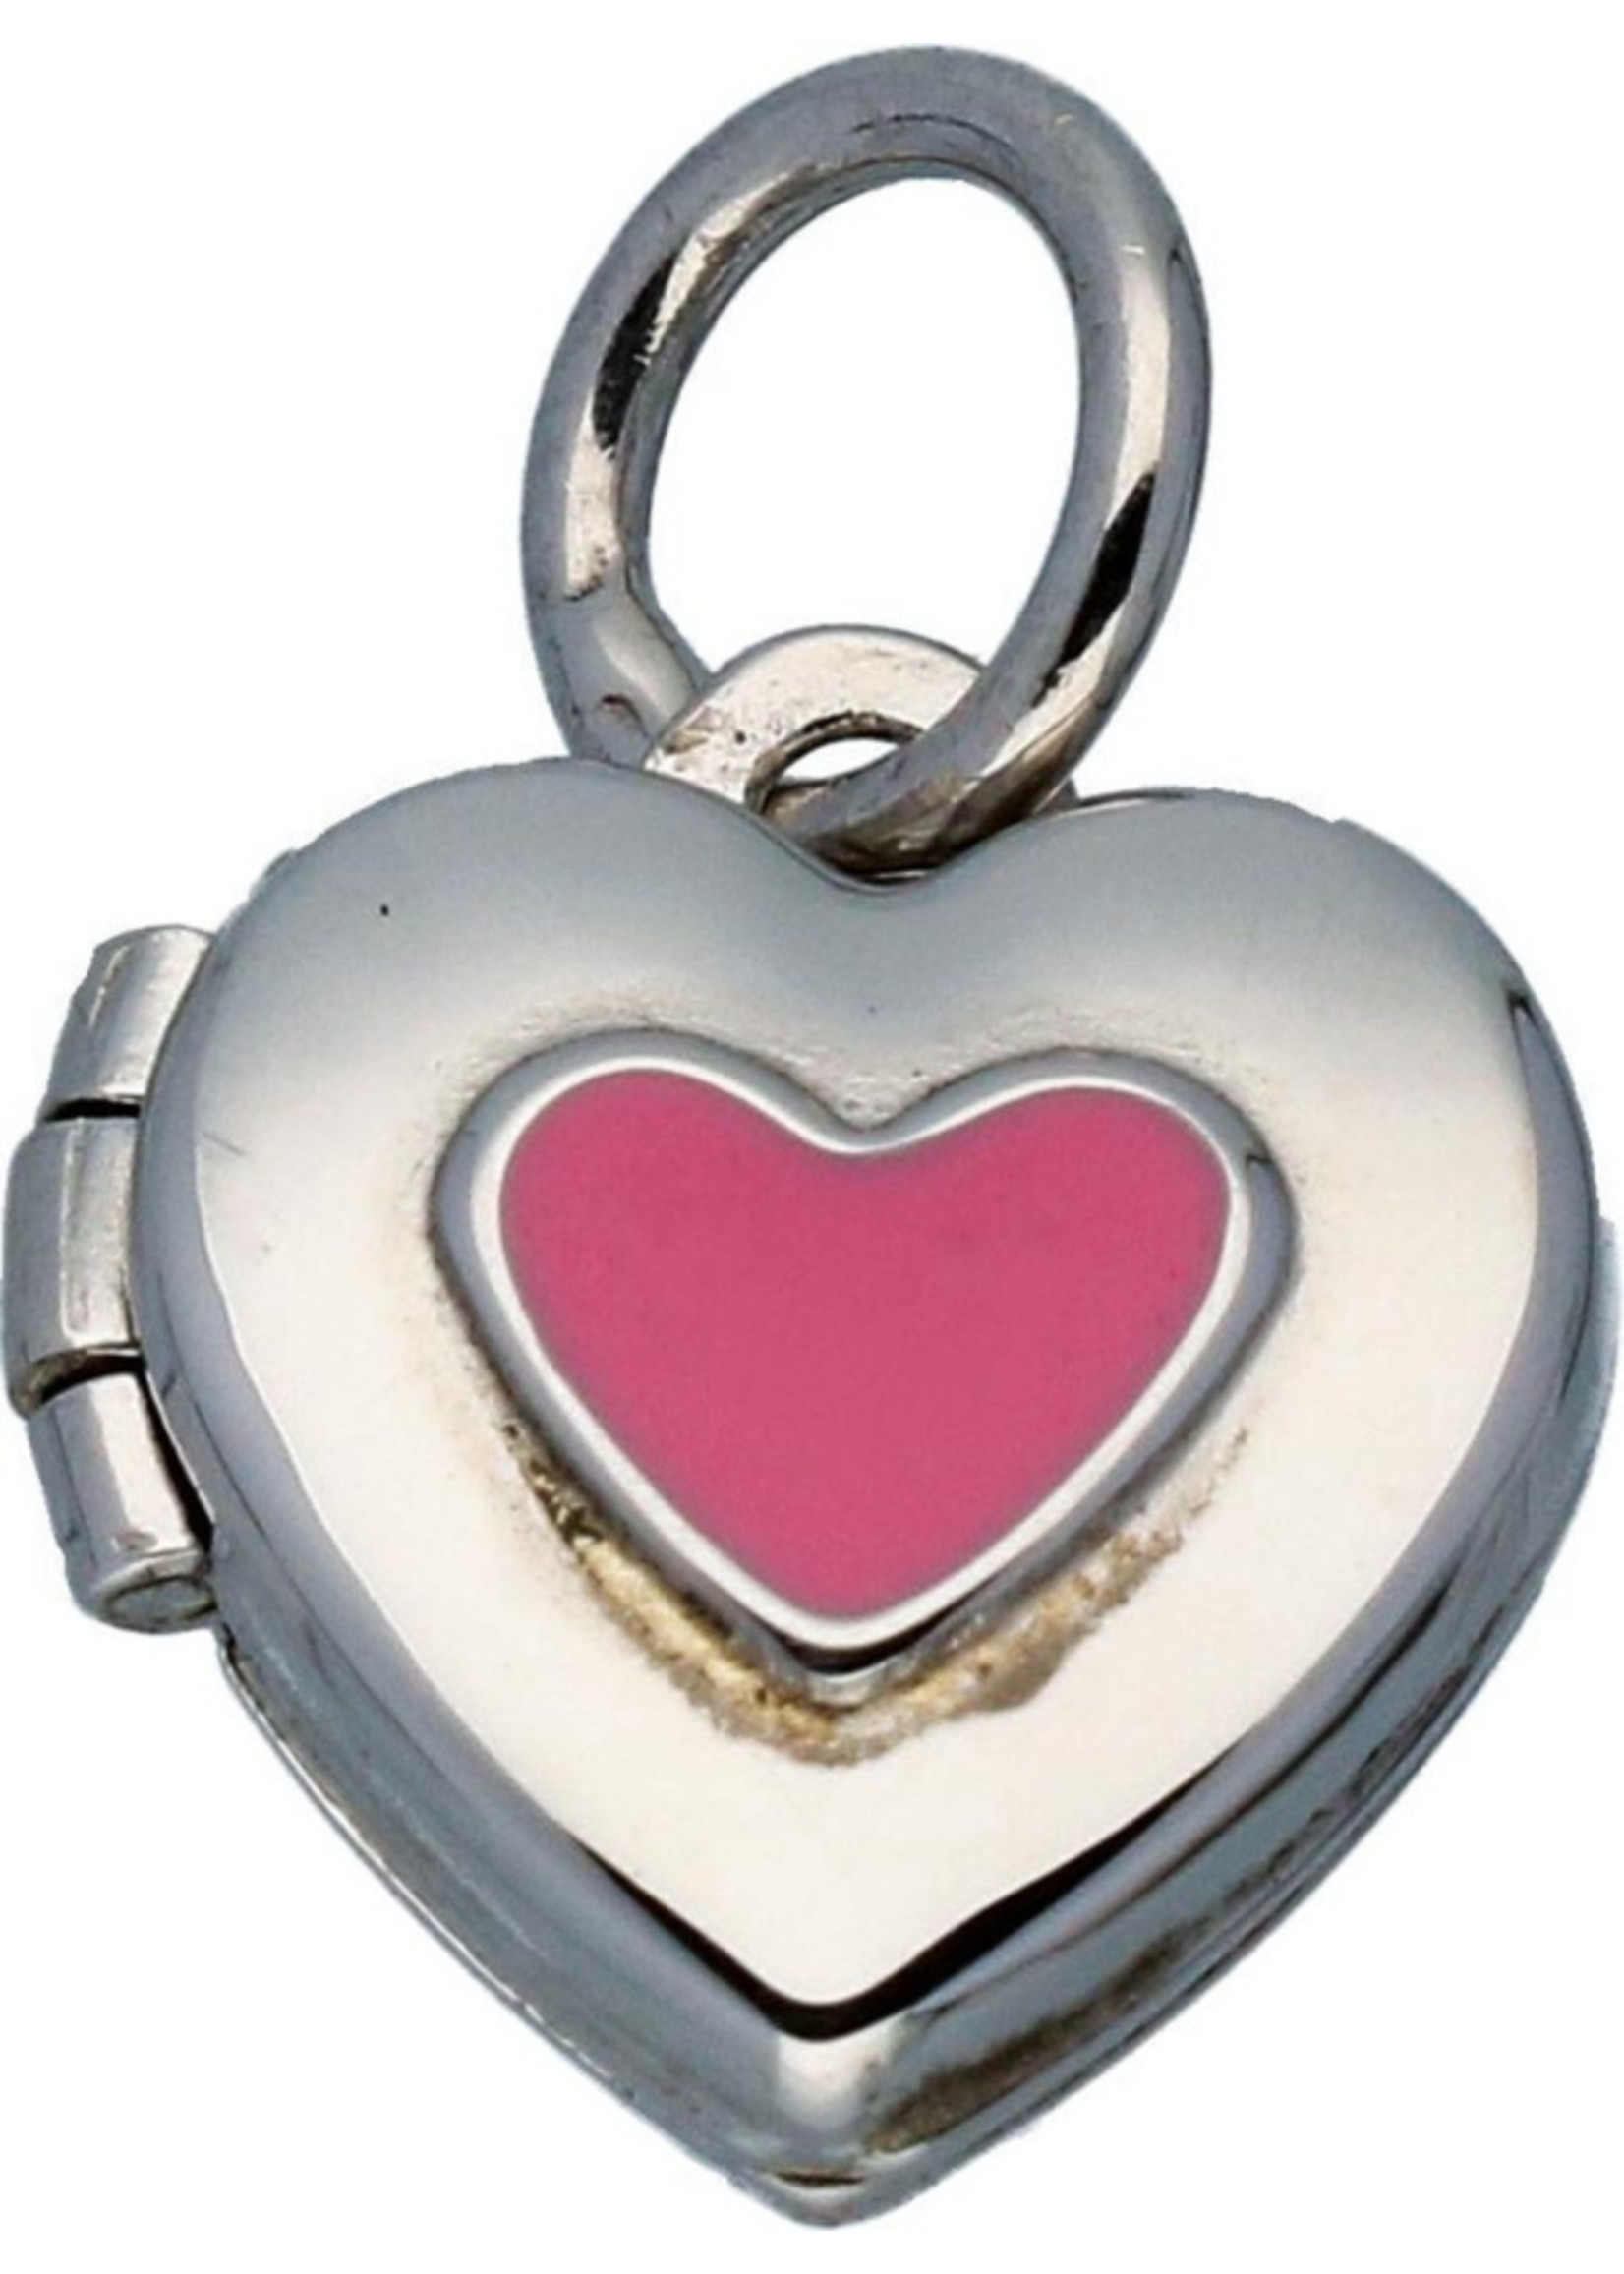 Lilly kindersieraden Lilly medaillon hart met roze hart - zilver - 10 mm